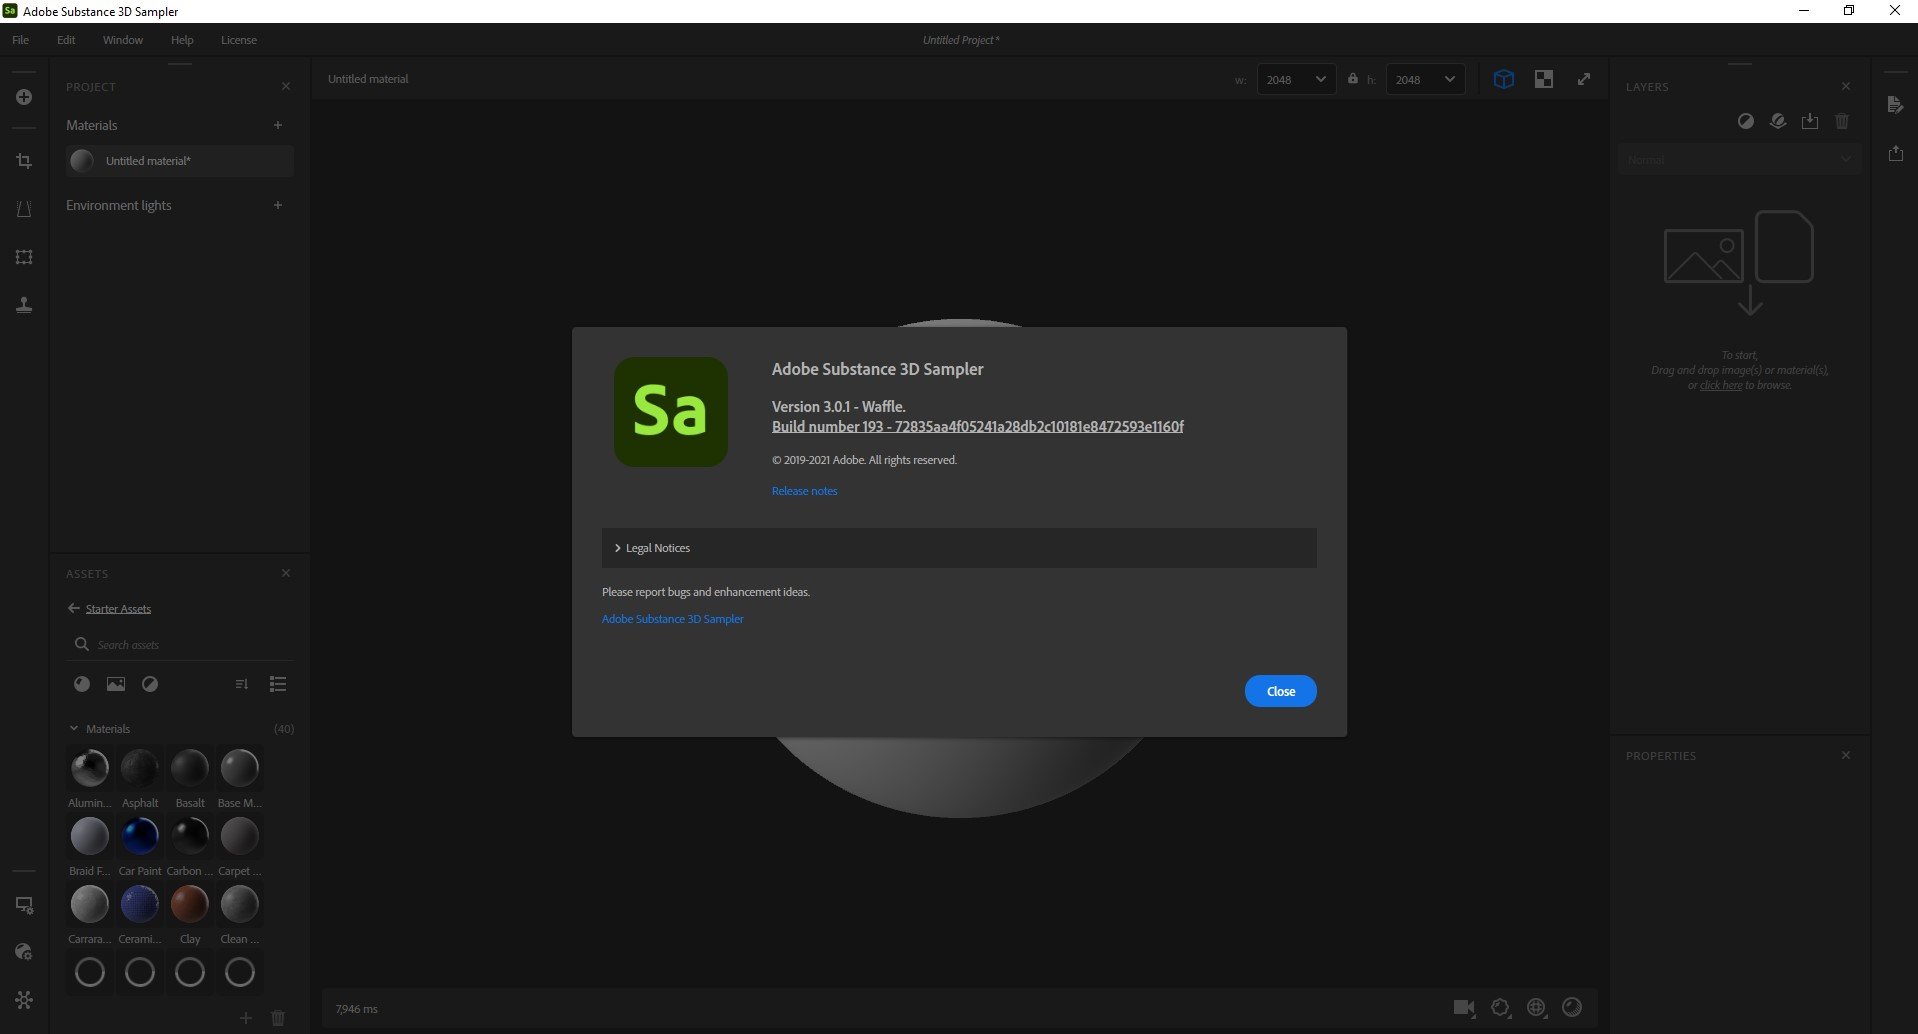 download the new for windows Adobe Substance 3D Sampler 4.1.2.3298